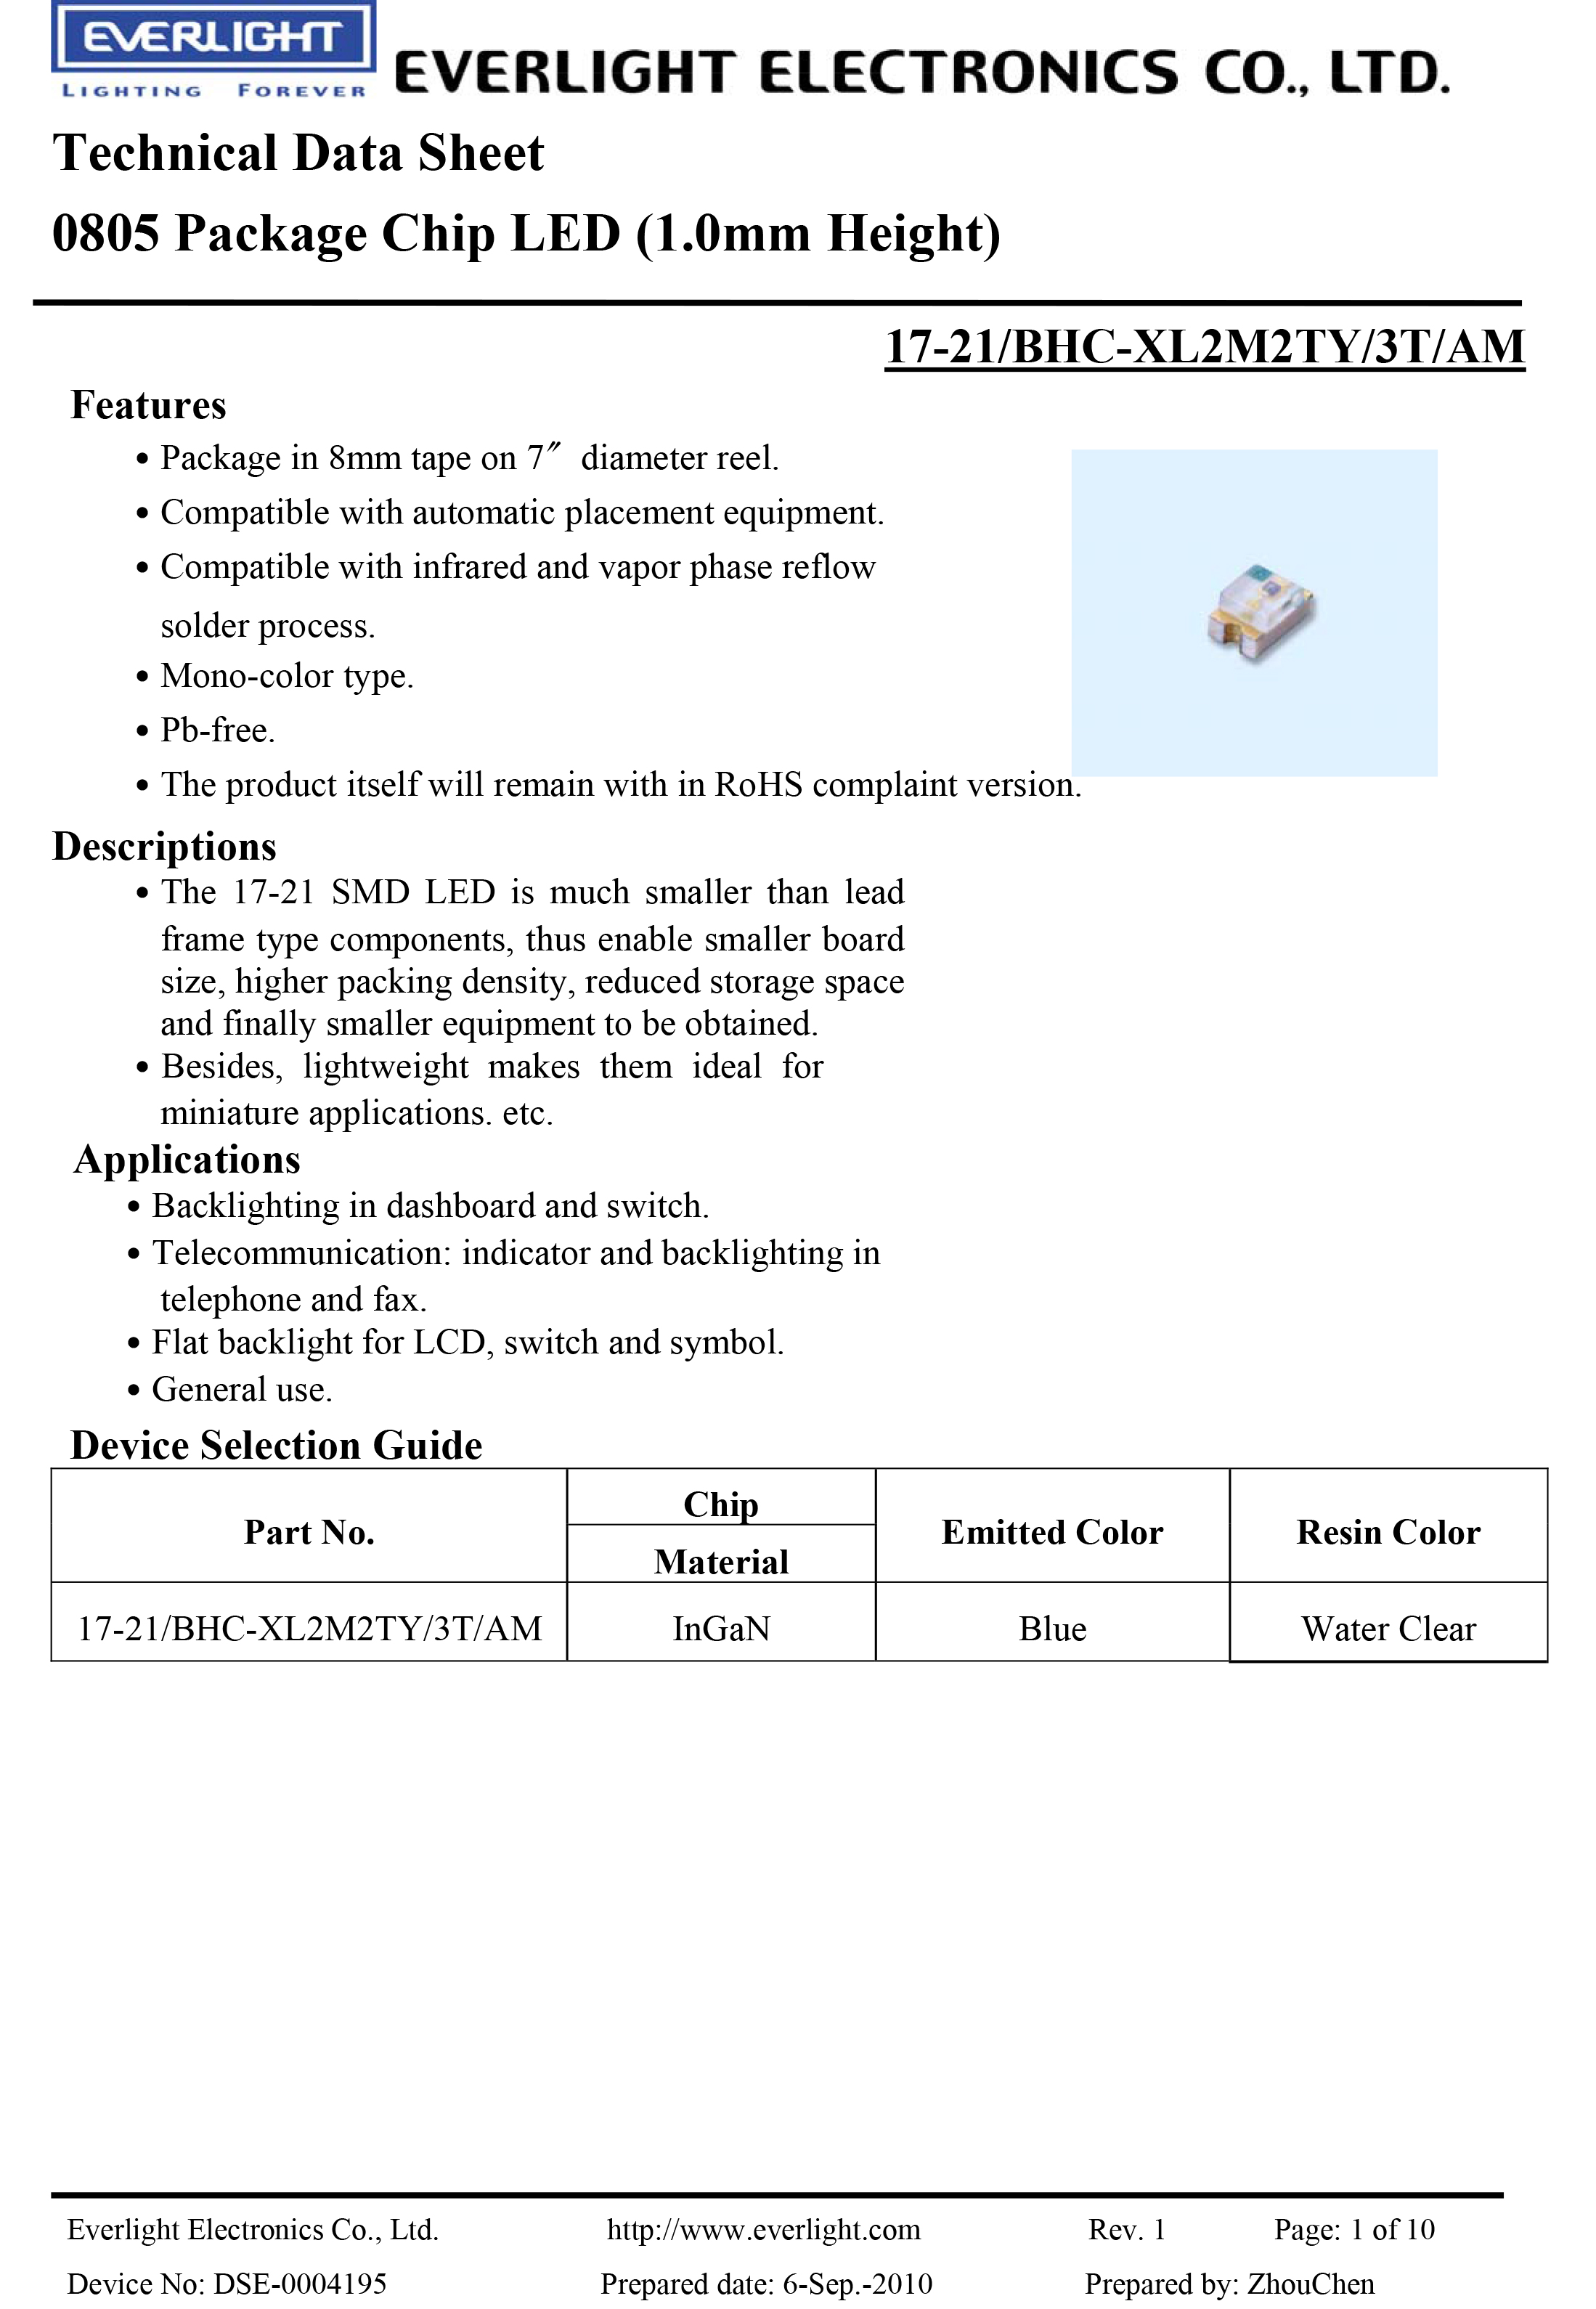 everlight 0805 Car lamp beads 17-21-BHC-XL2M2TY-3T-AM Datasheet